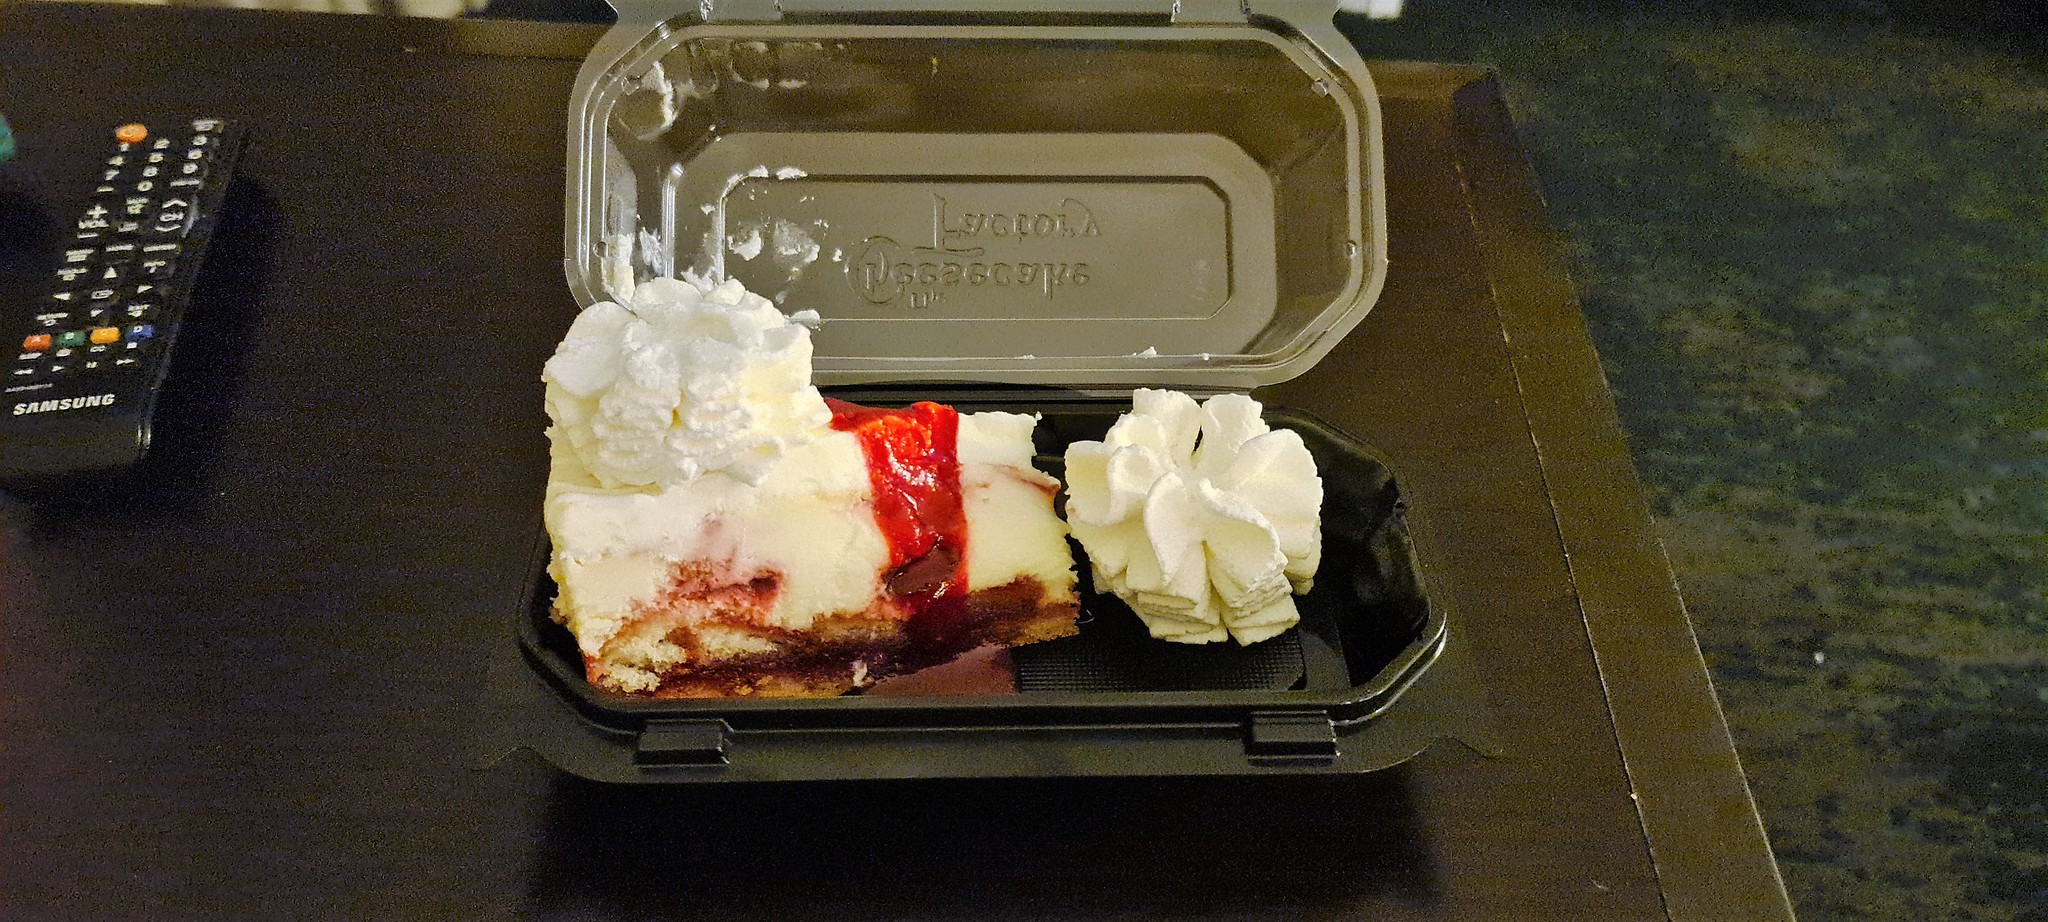 Lemon raspberry cheesecake from the Cheesecake Factory in Honolulu